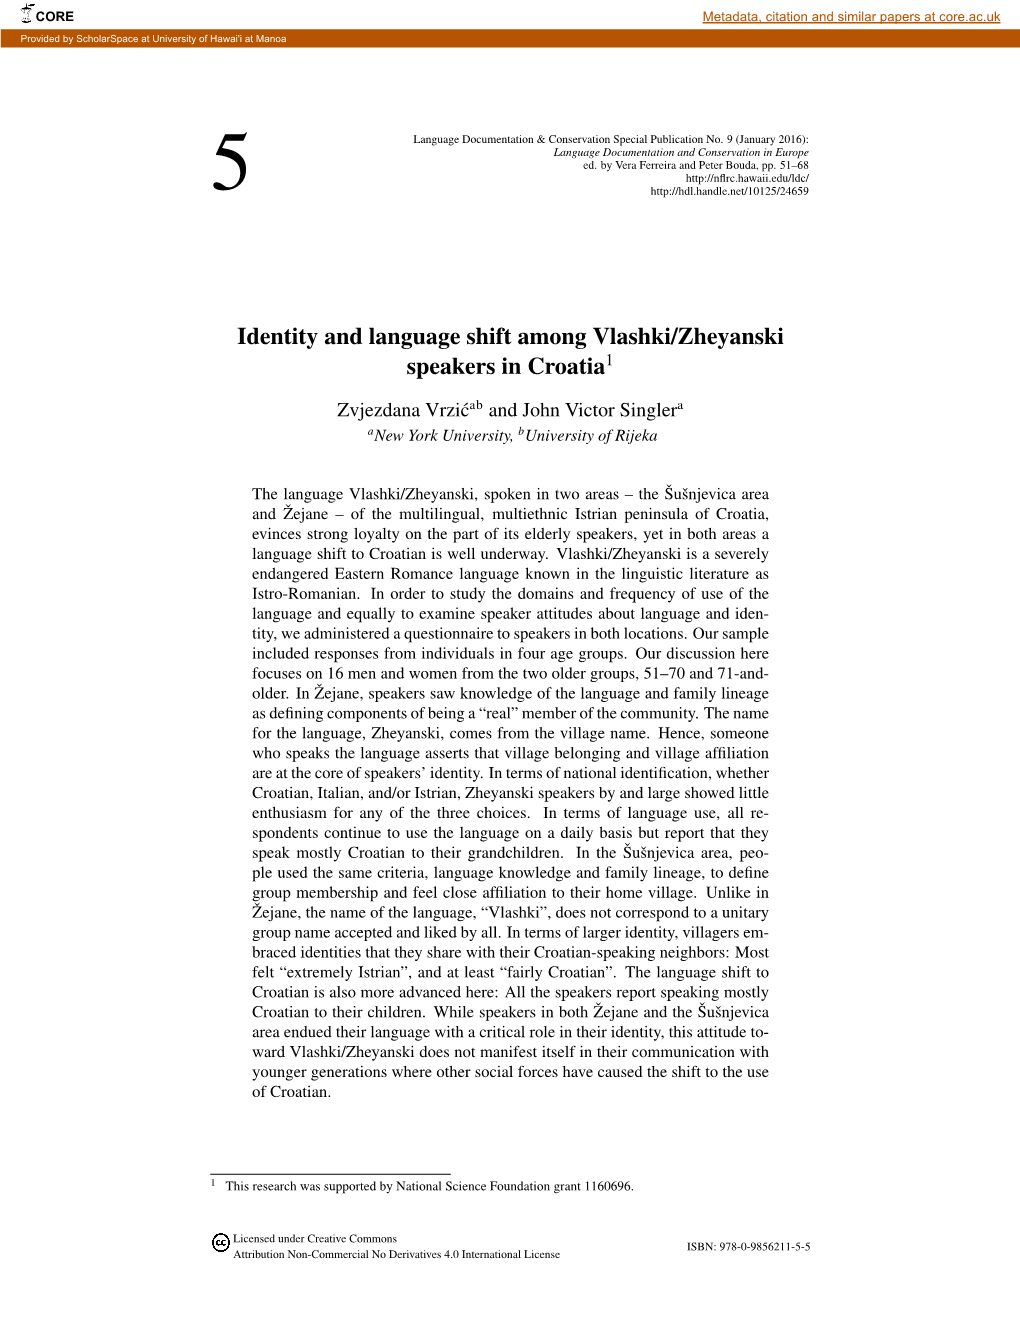 Identity and Language Shift Among Vlashki/Zheyanski Speakers in Croatia1